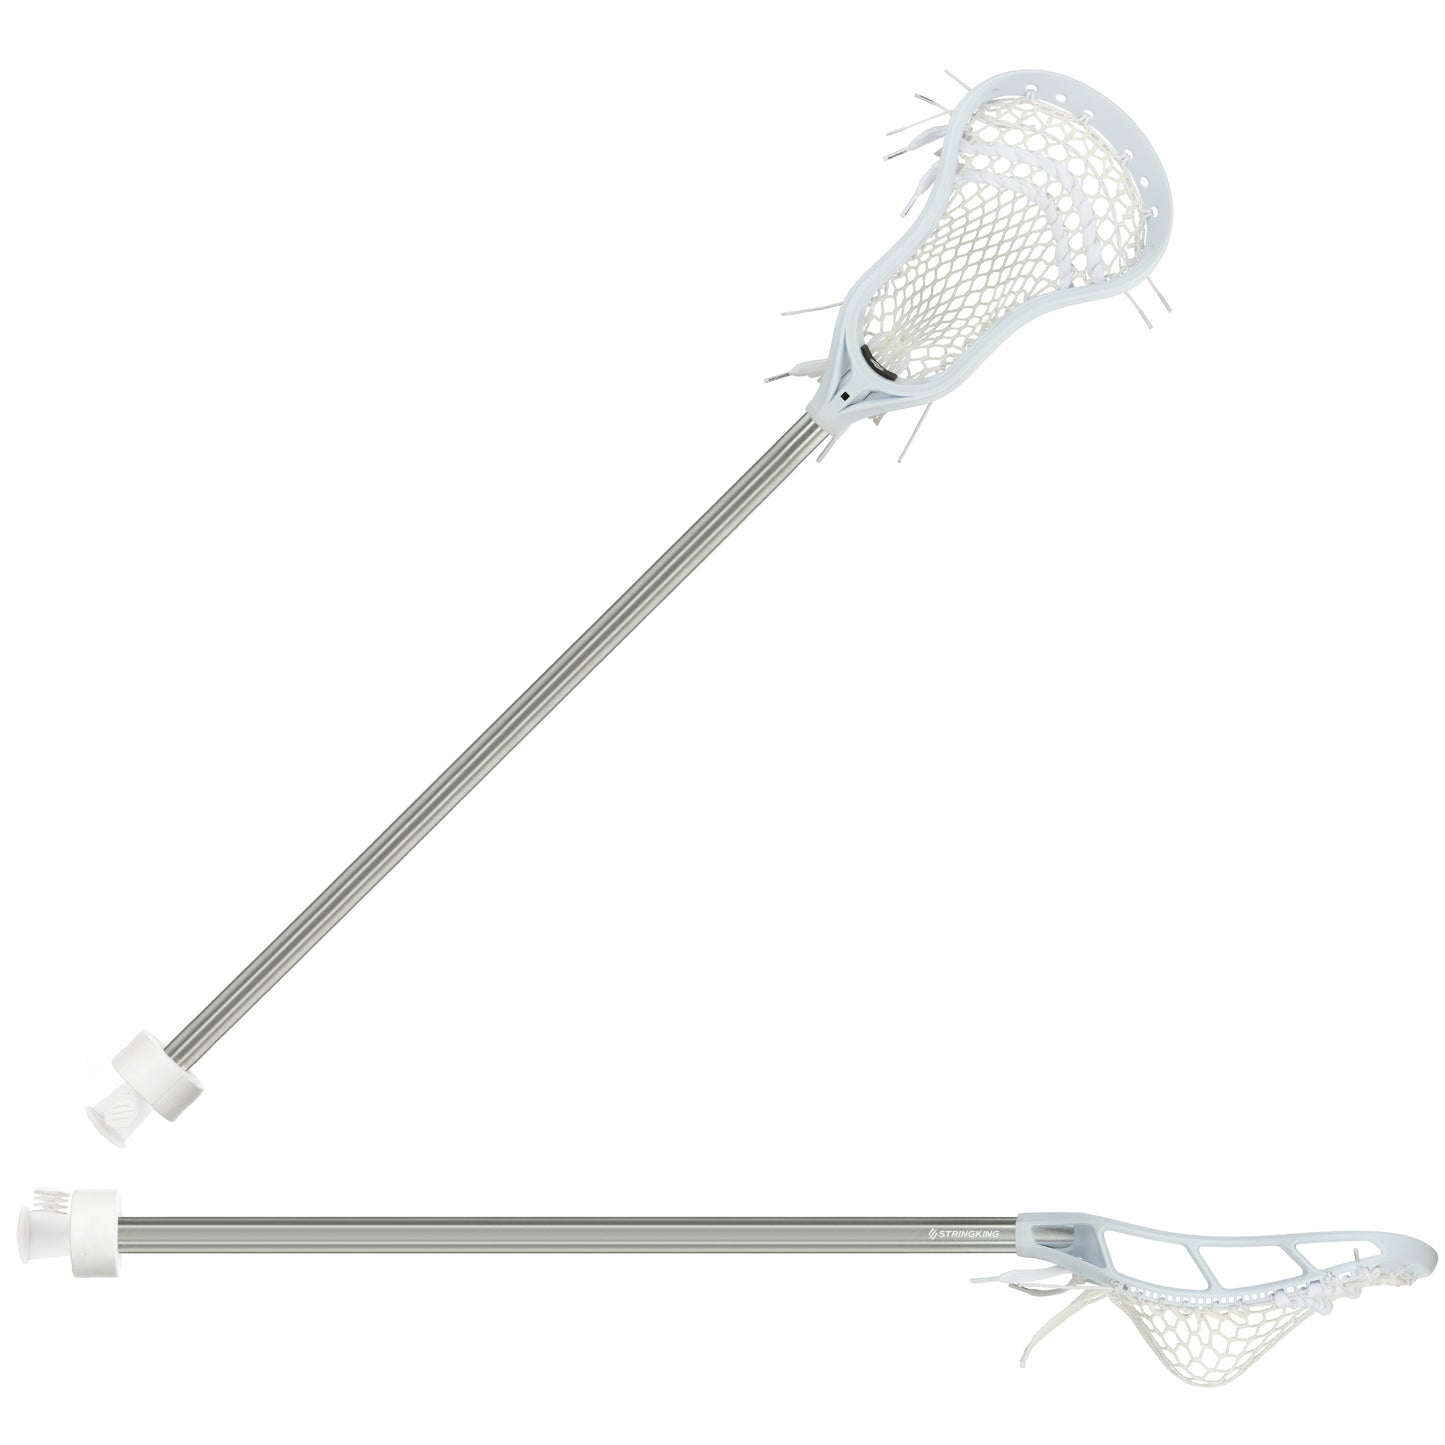 StringKing Legend Complete 2 Intermediate Men's Lacrosse Stick